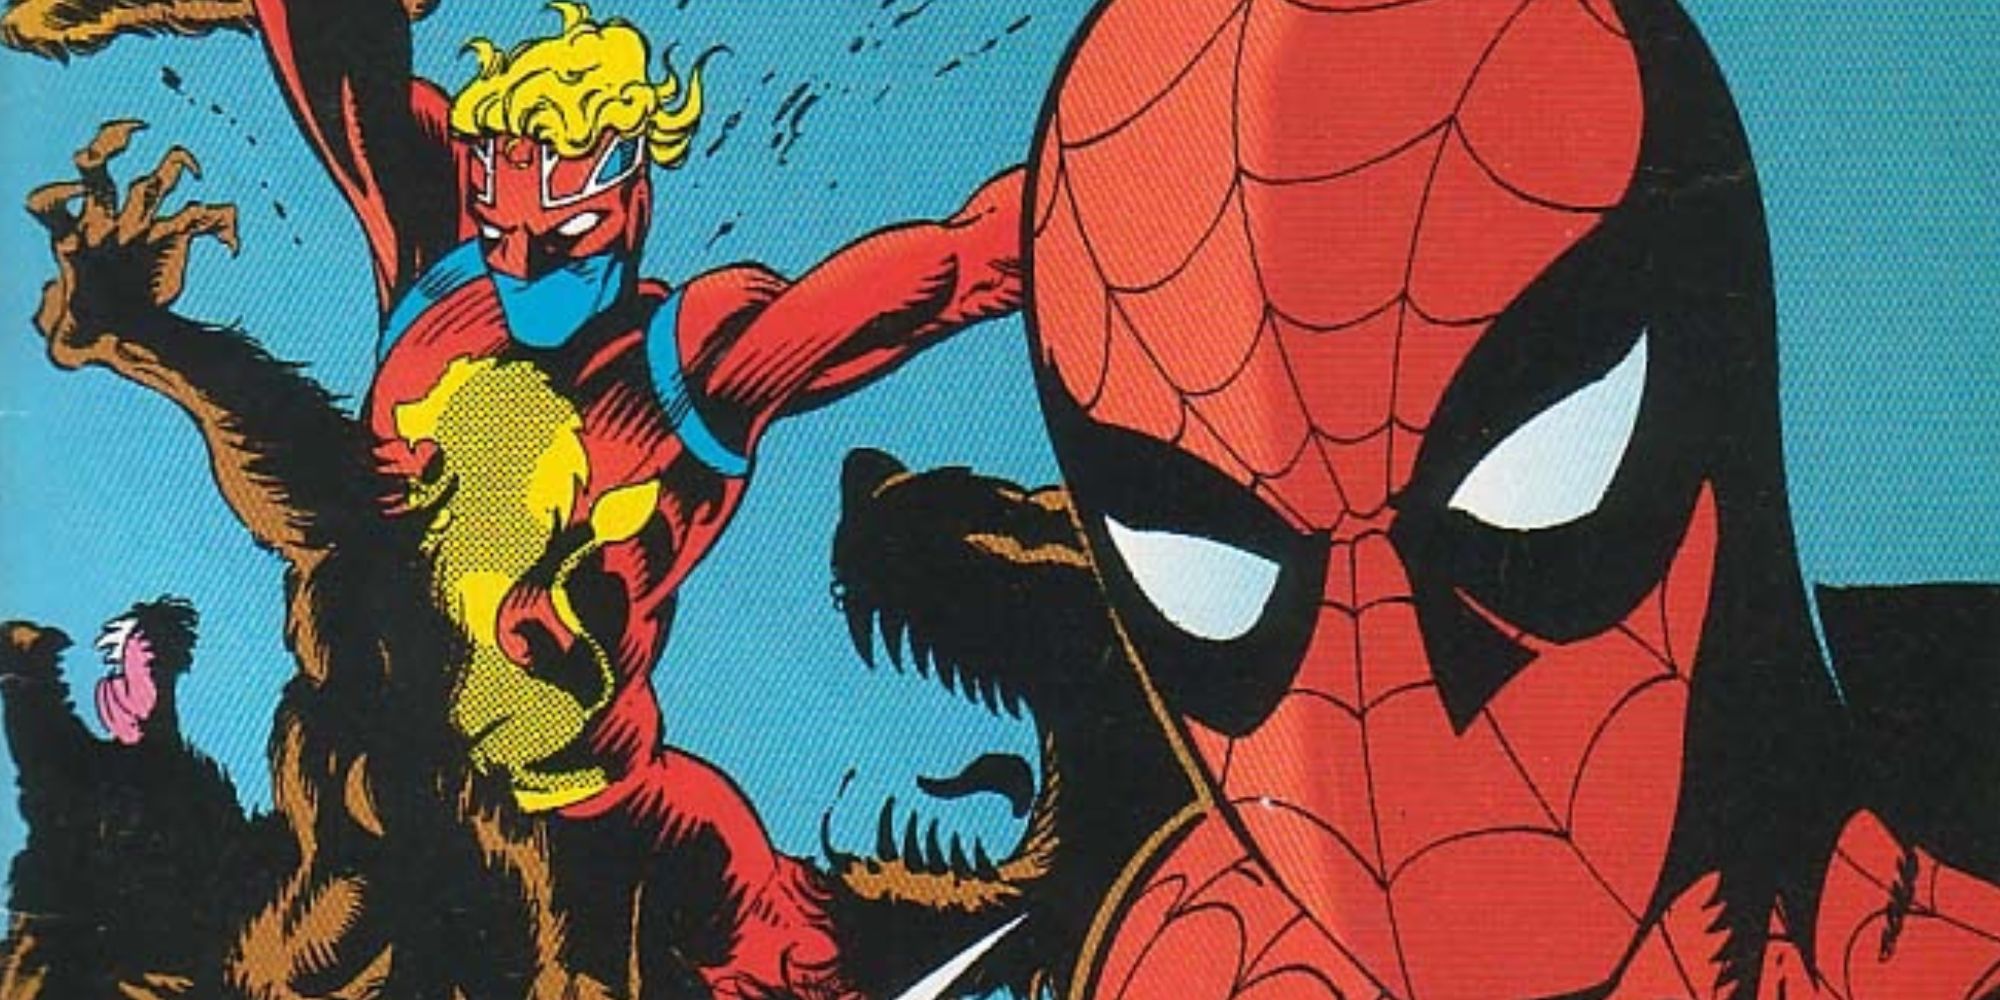 Spider-Man and Captain Britain team up in Marvel Comics.